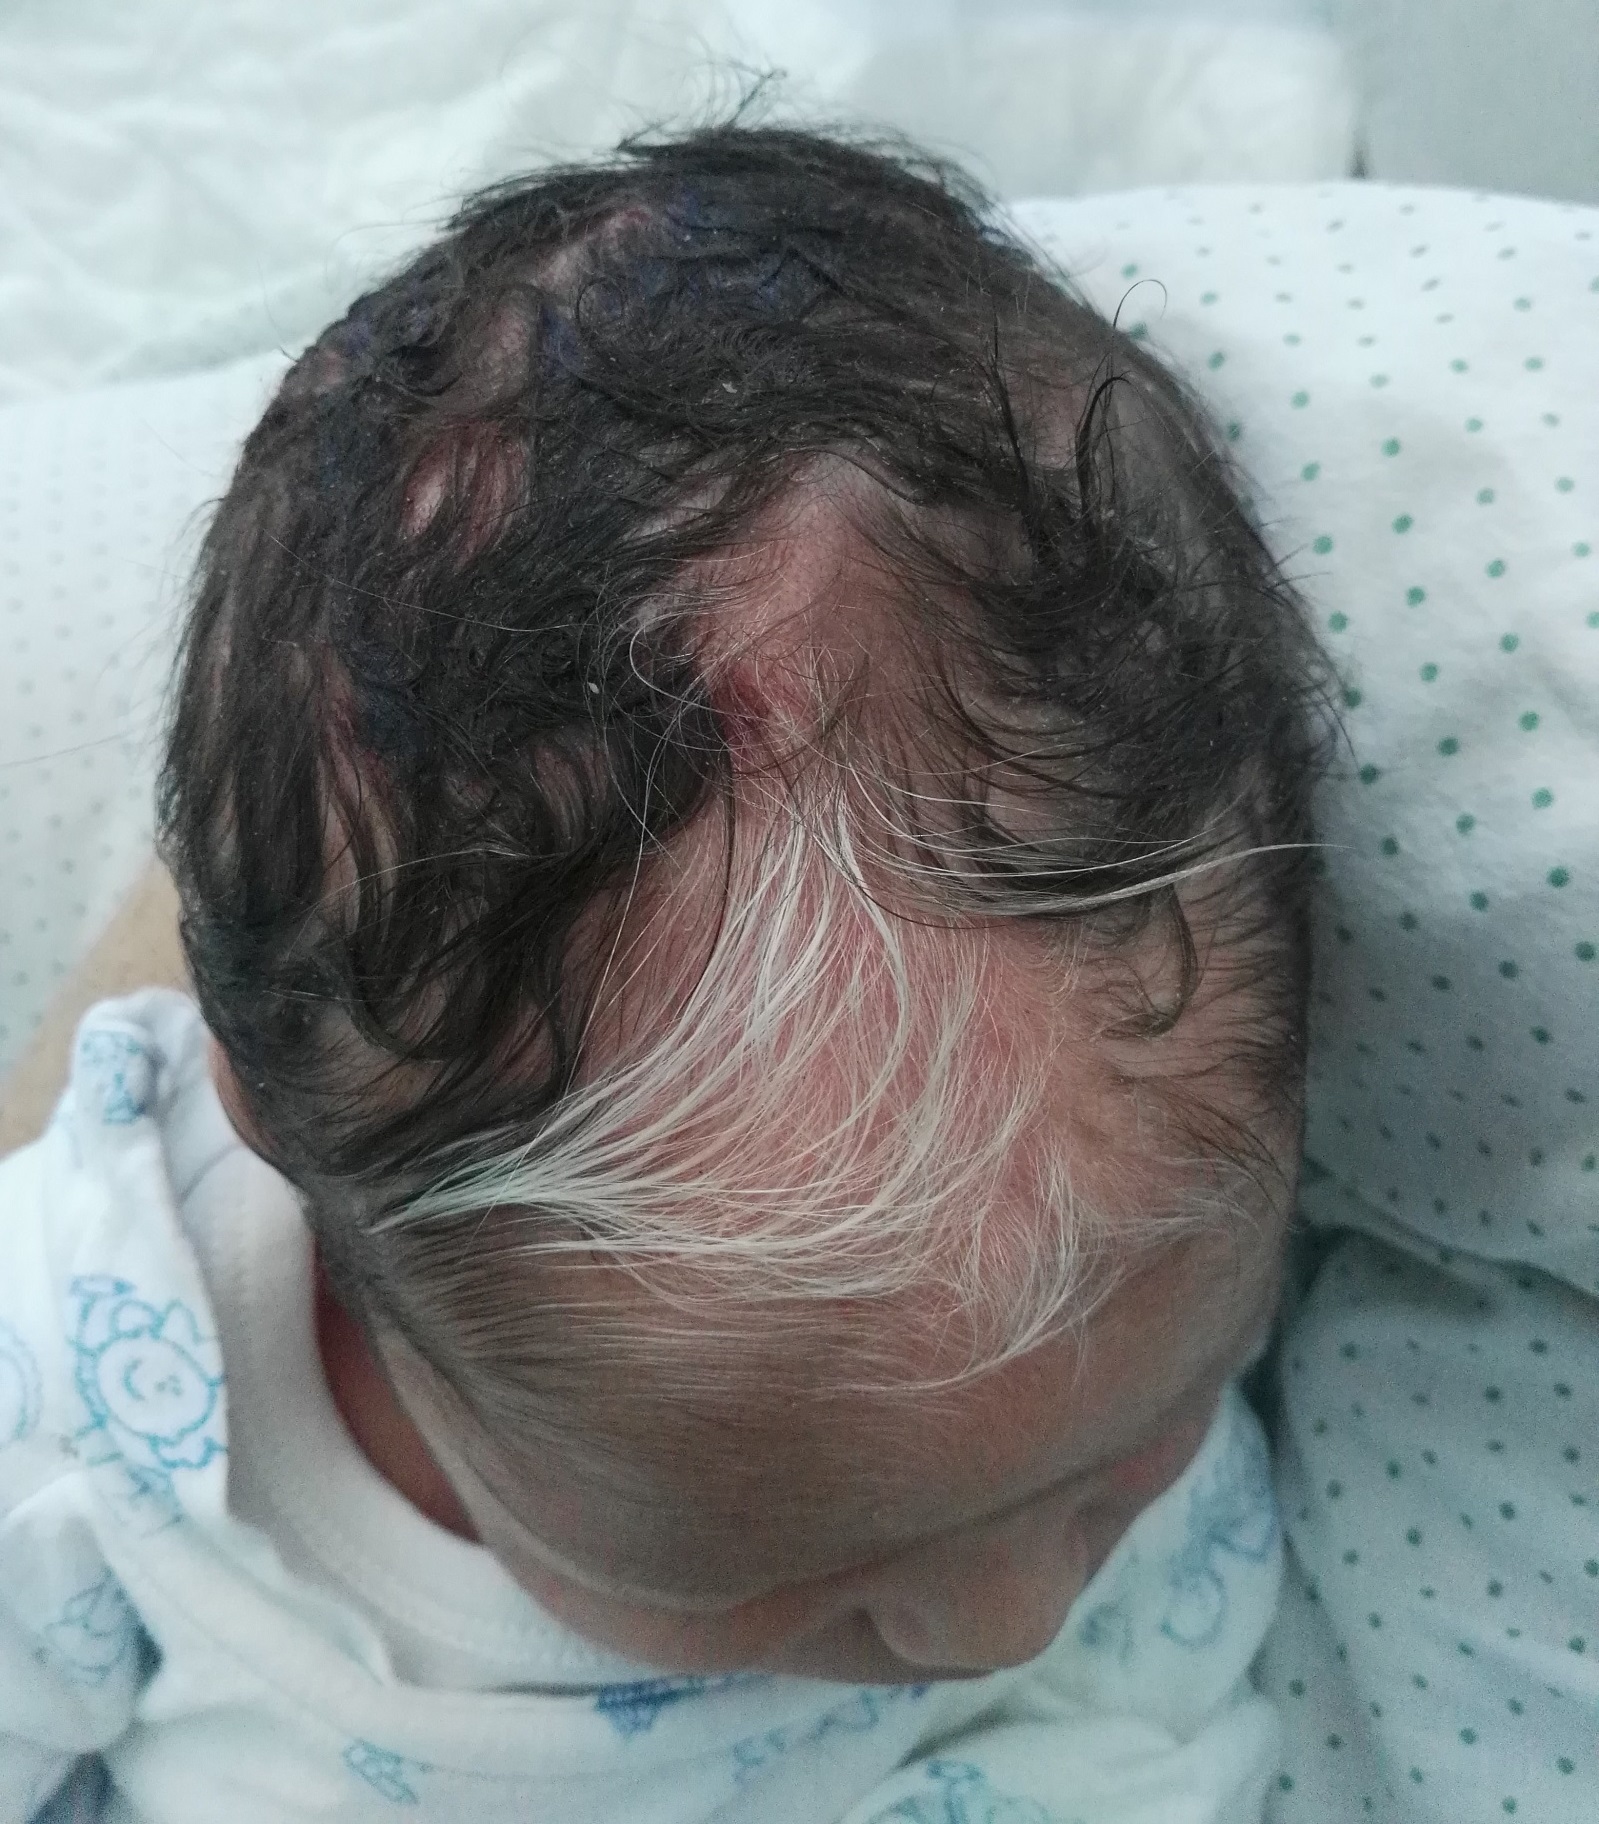 Ministerio relajarse correr Continuum: Mechón de pelo blanco en un neonato